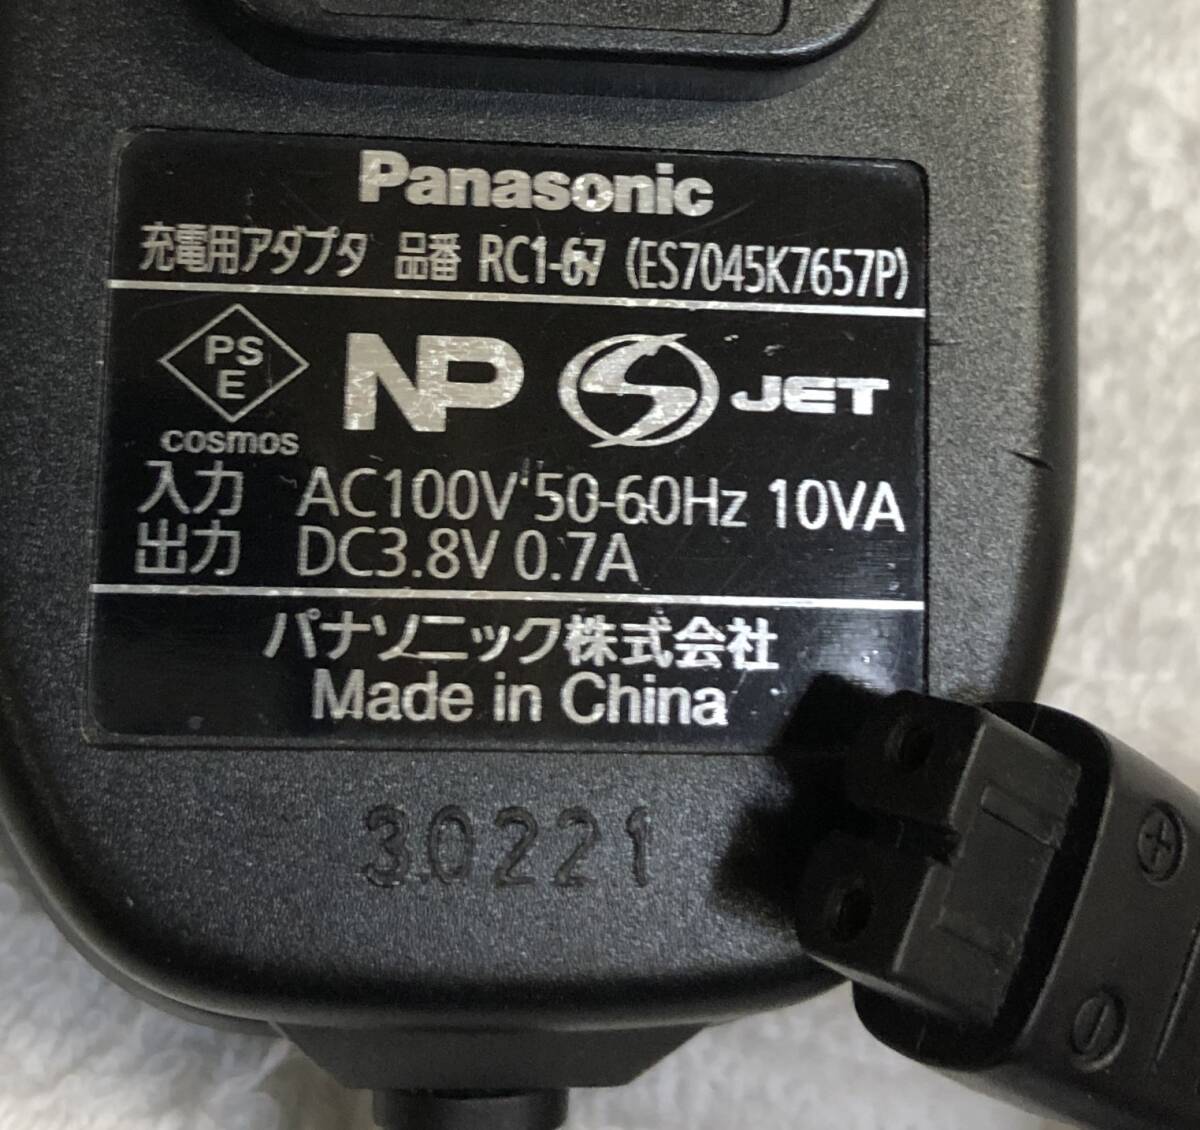 * Panasonic electric shaver for AC adaptor RC1-67